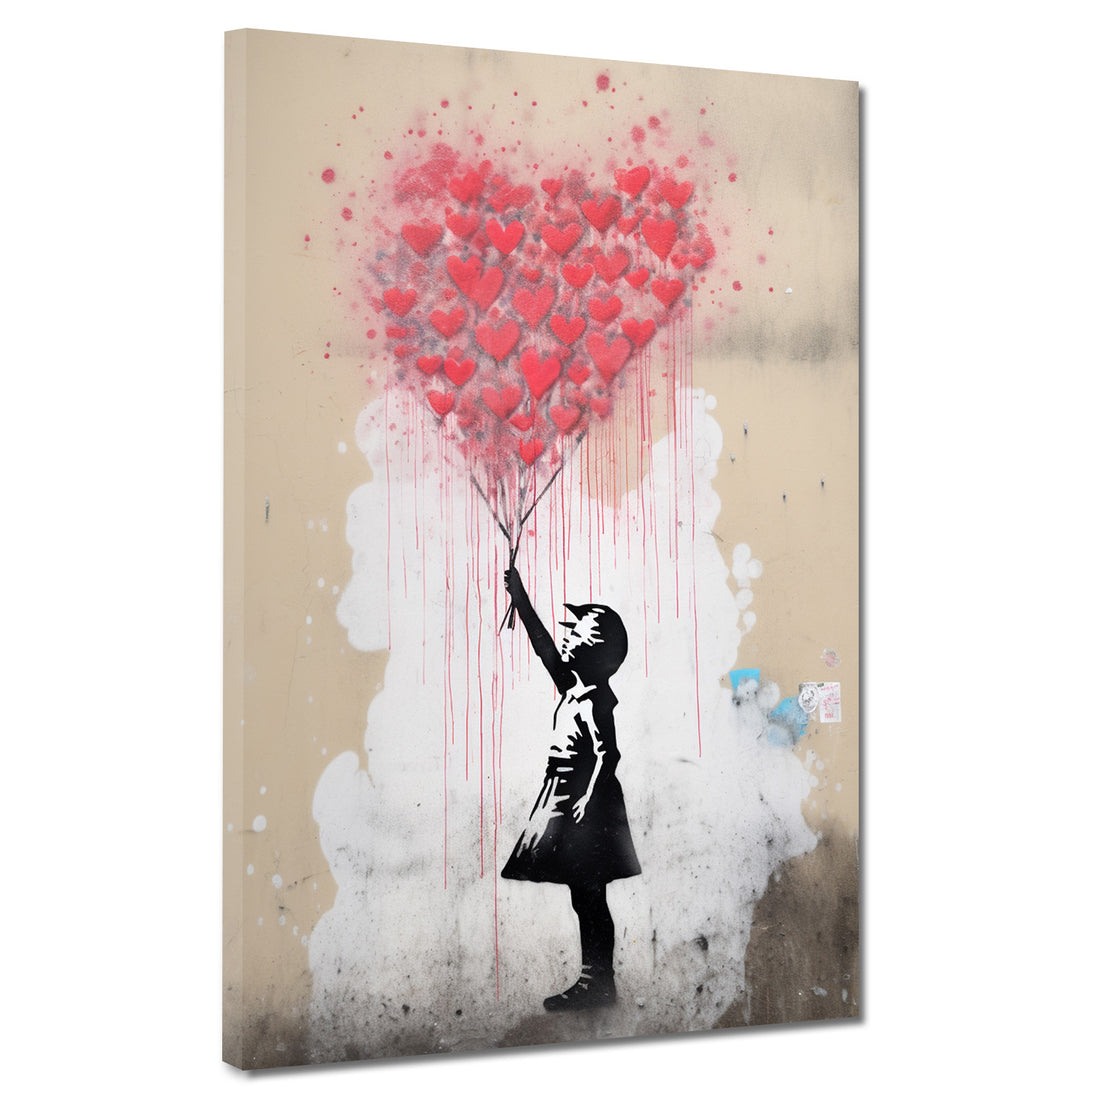 Wandbild Mädchen mit rotem Ballon aus Herzen, Street Art Banksy Art